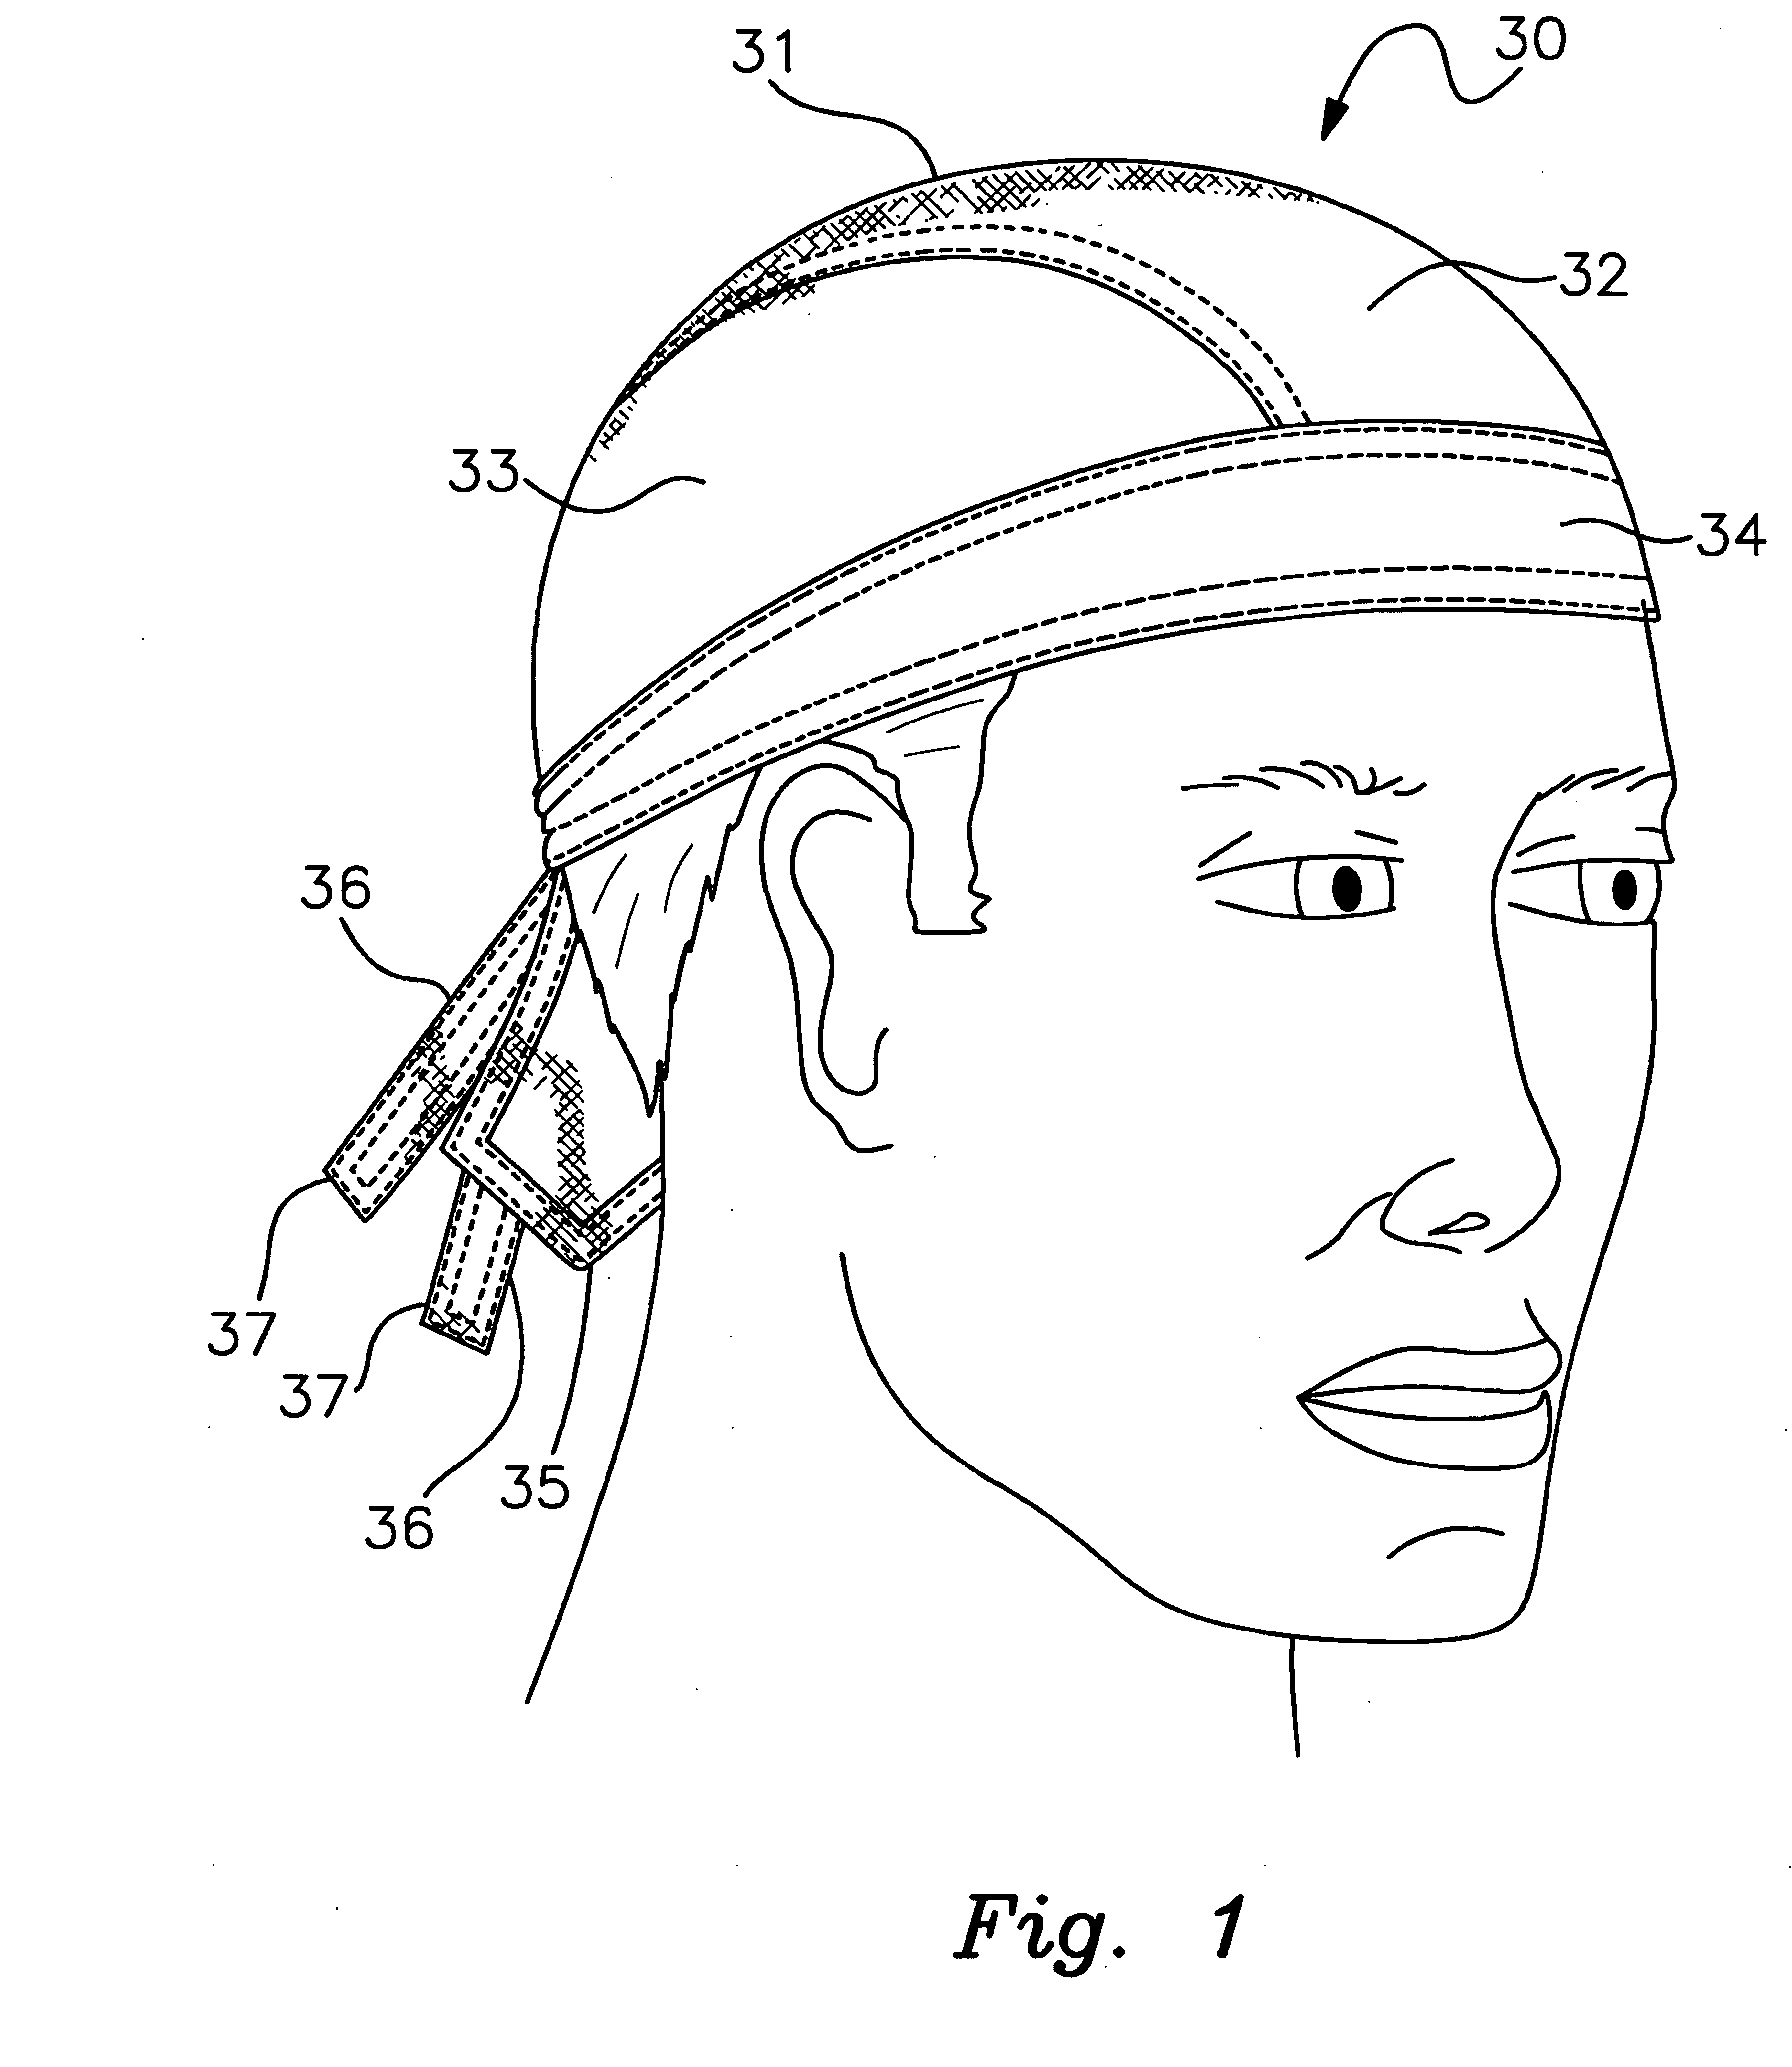 Bandanna-style head covering